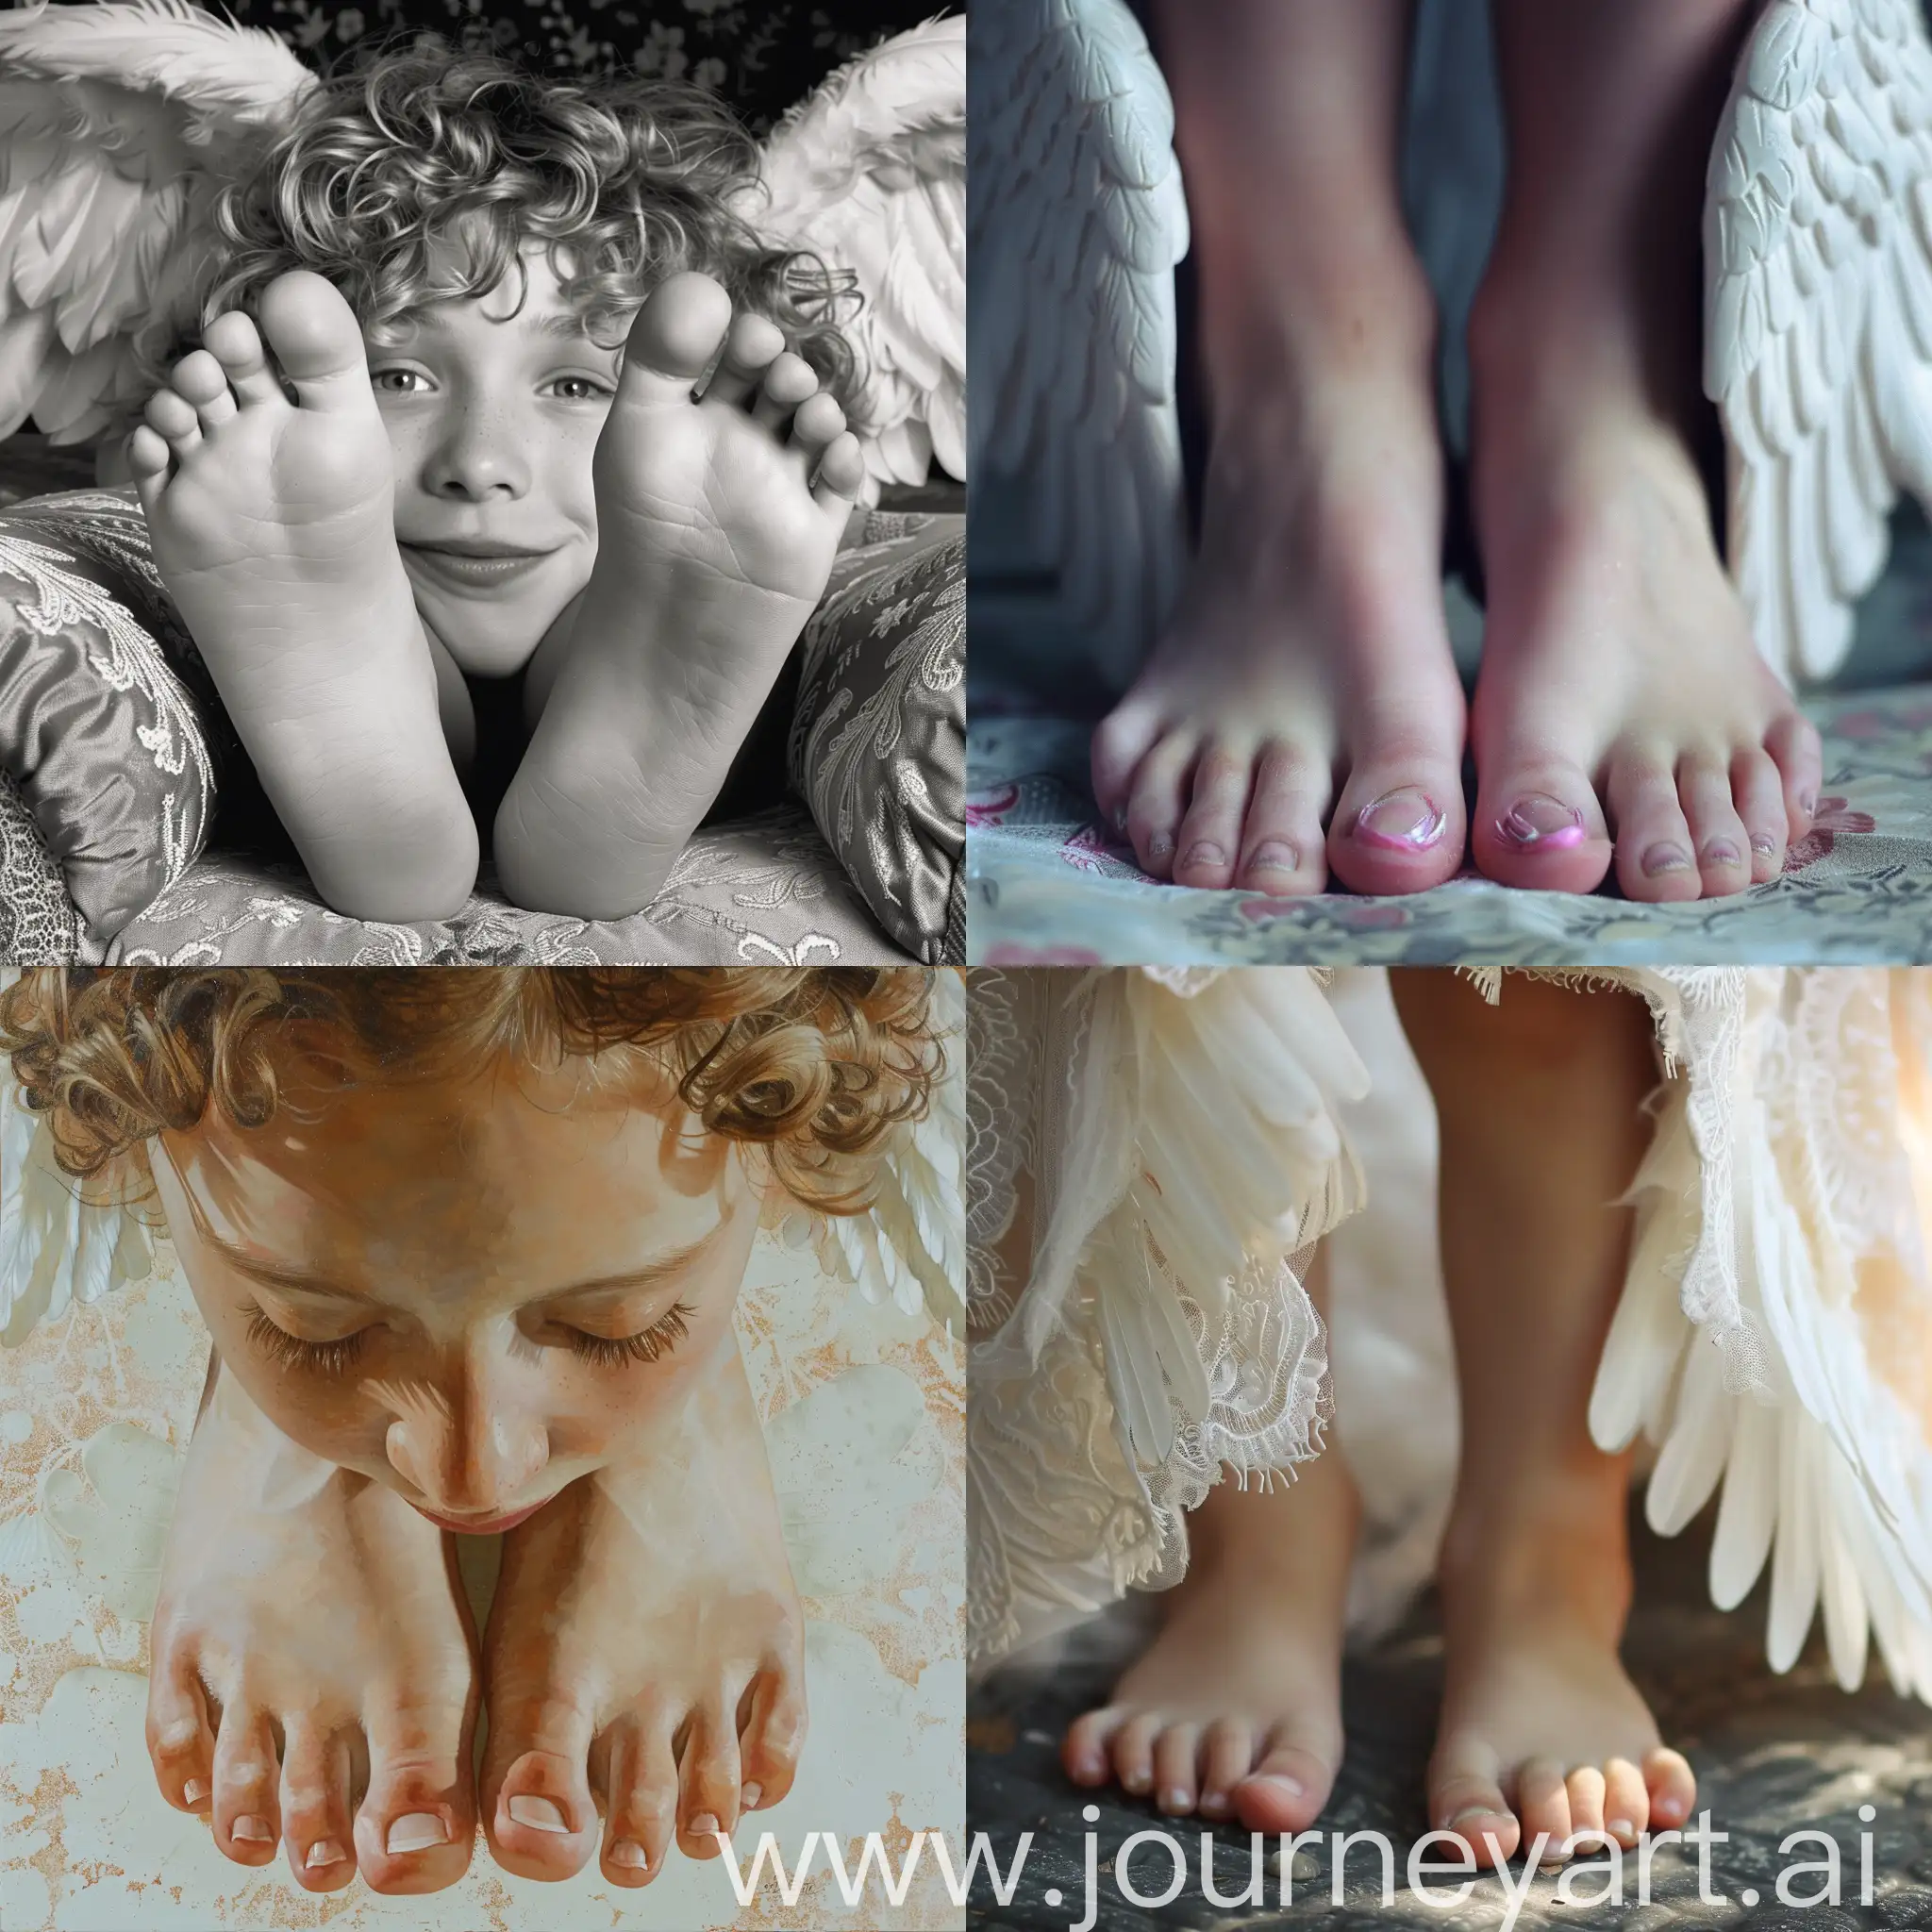 Vibrant-Teen-Angel-Toes-Artwork